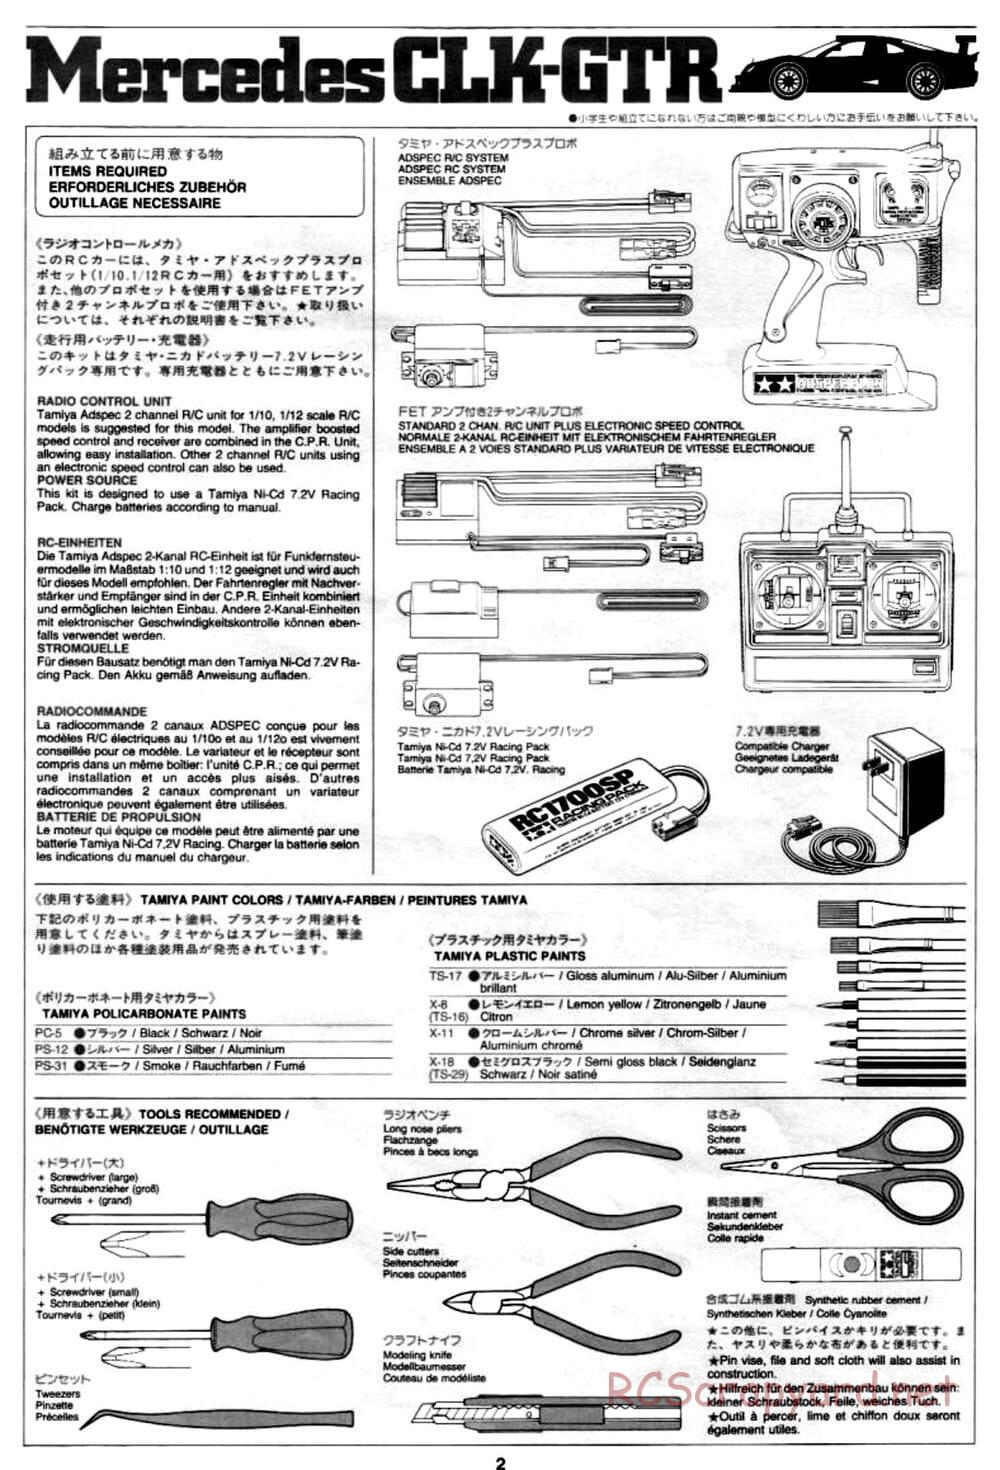 Tamiya - Mercedes CLK-GTR - TA-03R Chassis - Manual - Page 2